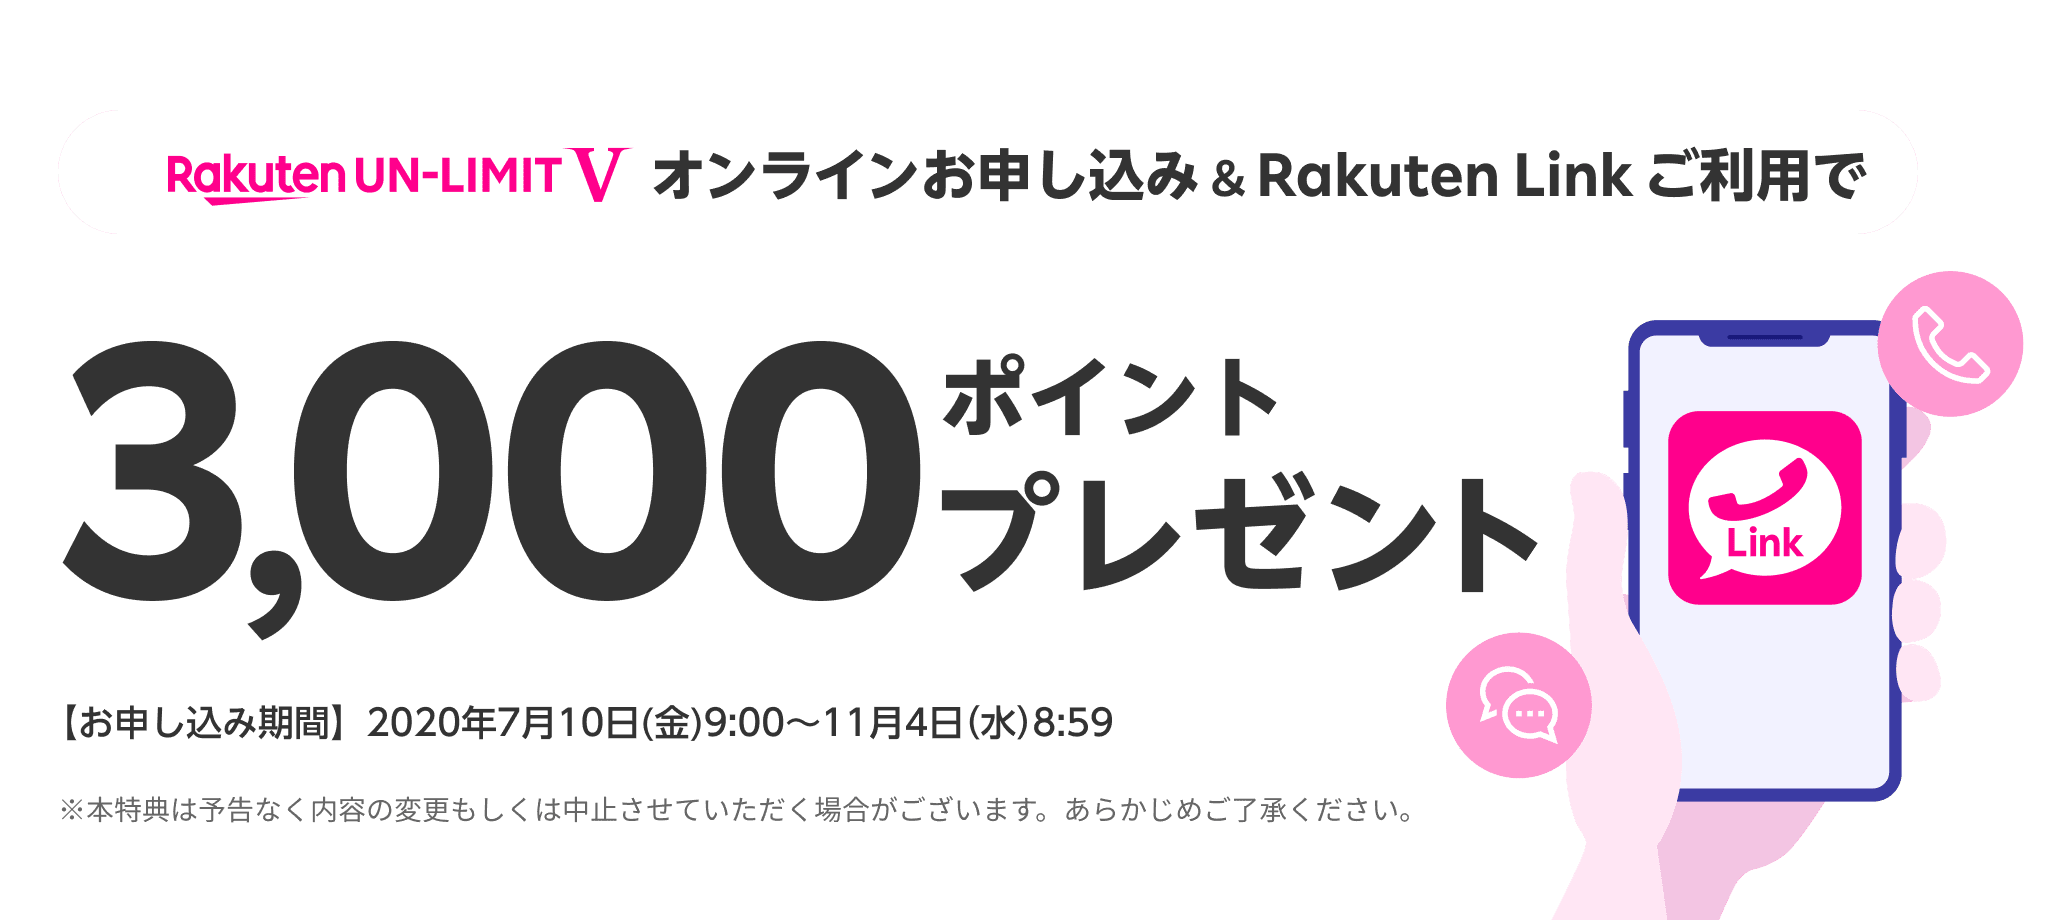 Rakuten Un Limit Vオンラインお申し込み Rakuten Linkご利用で3 000ポイントプレゼント 楽天モバイル